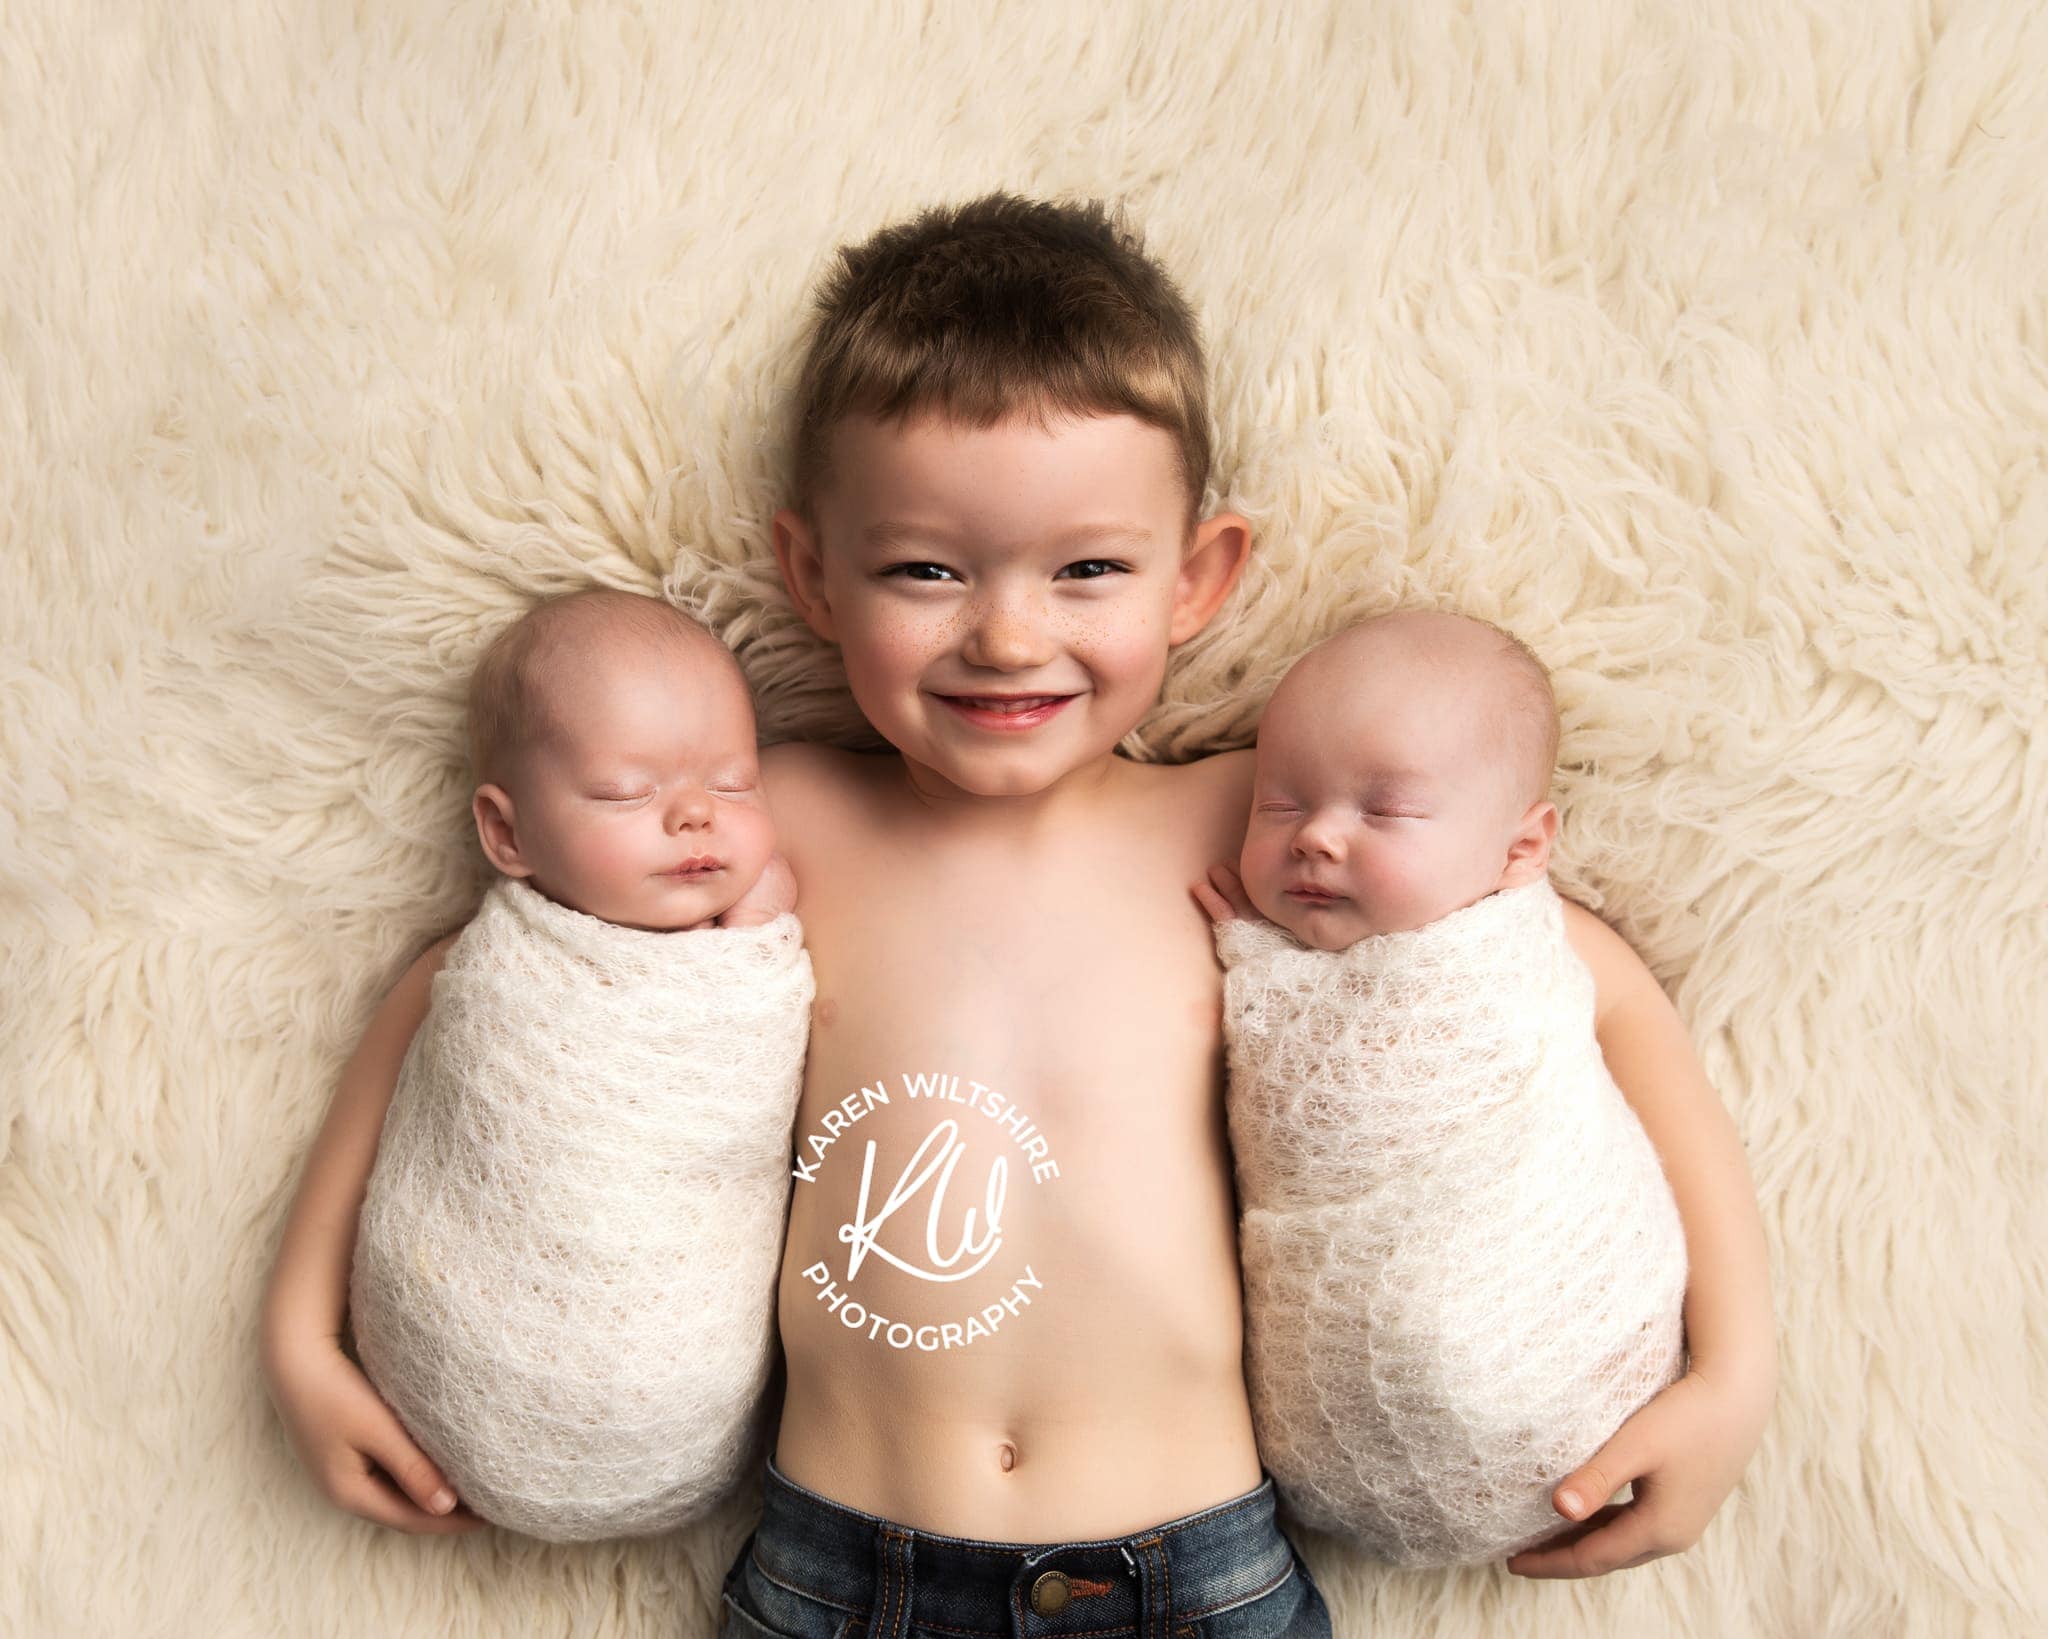 Newborn twins photographer